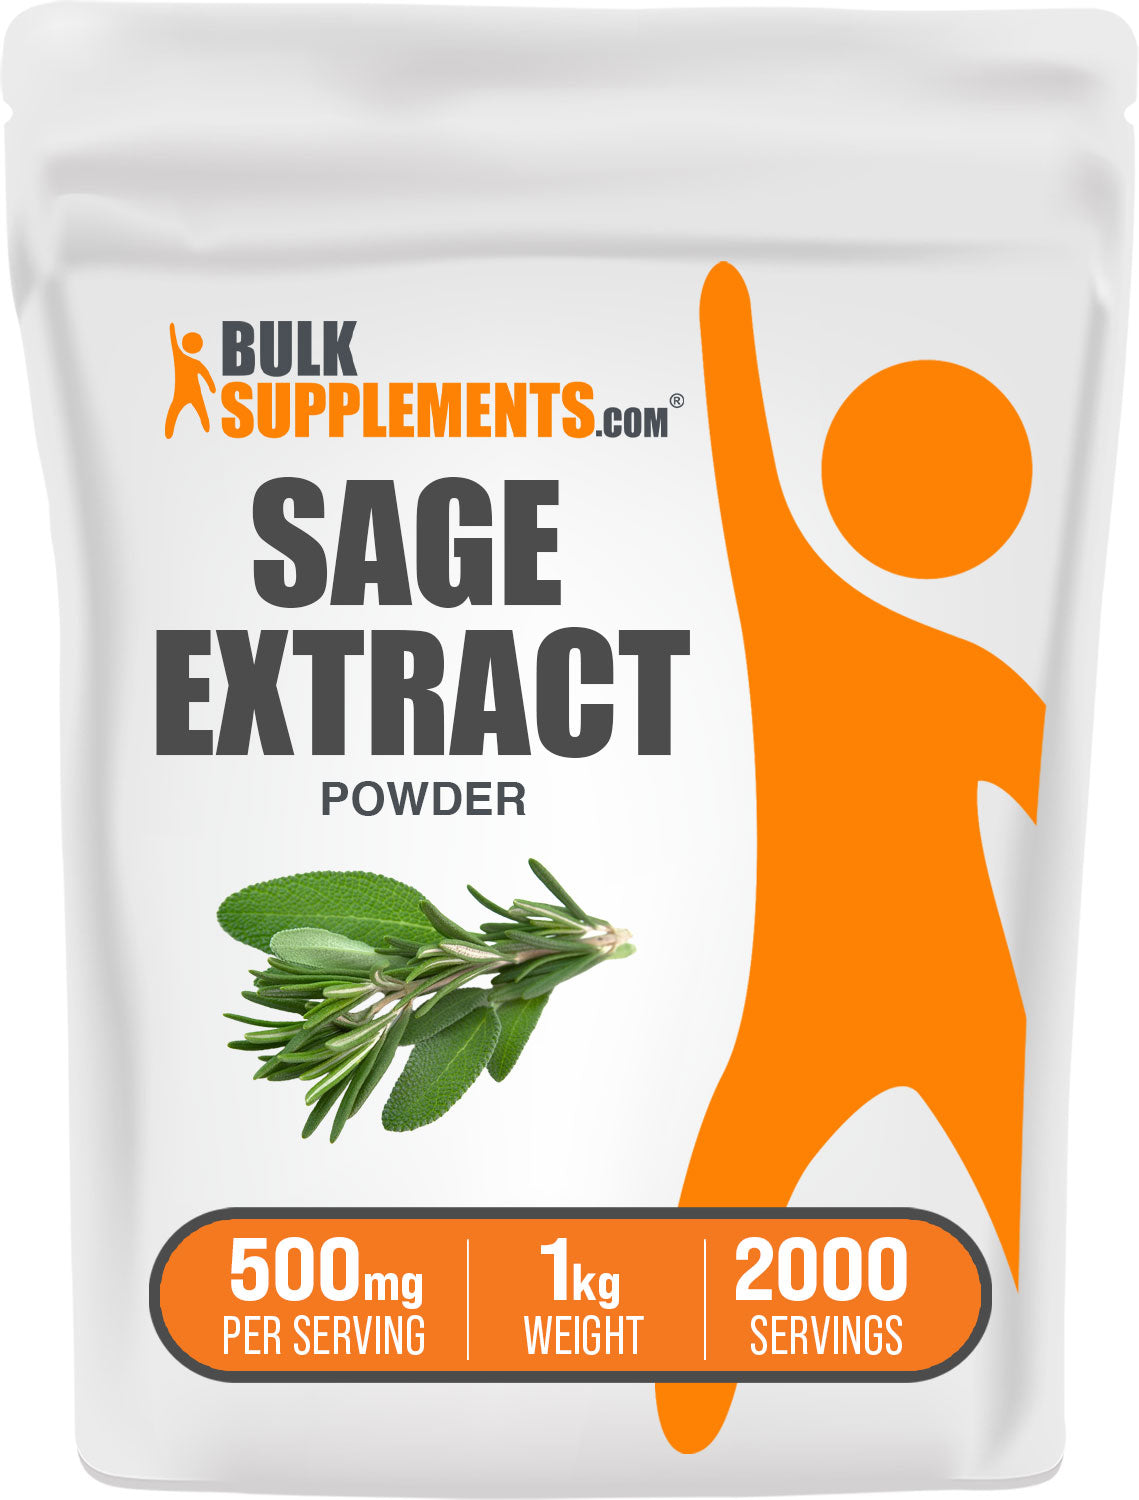 BulkSupplements.com Sage Extract Powder 1kg bag